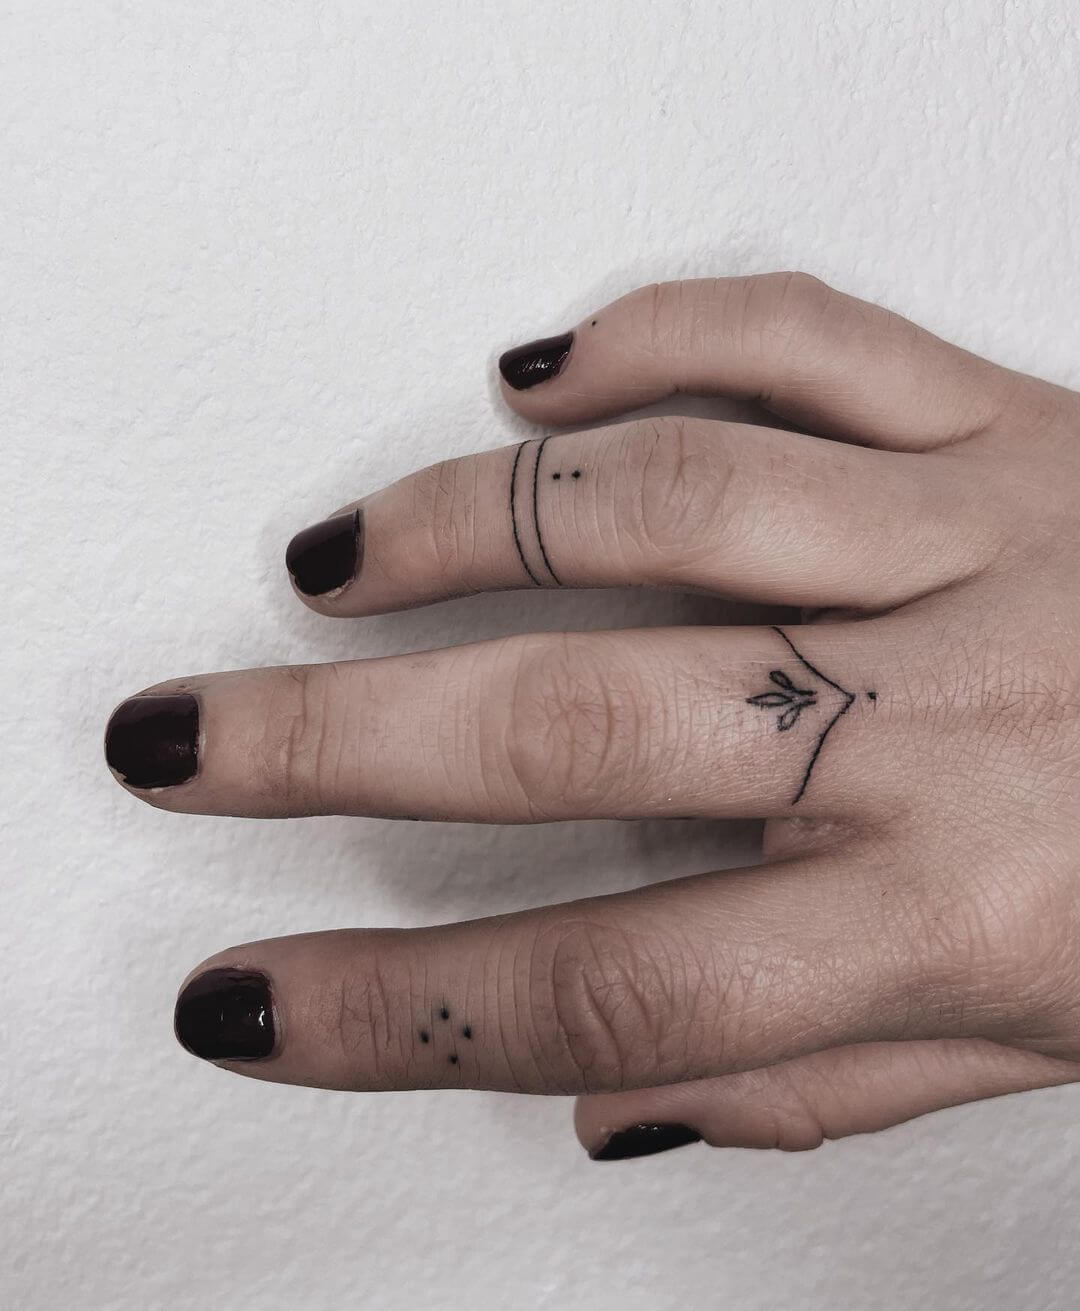 Small Finger Tattoos – INK ART LINK